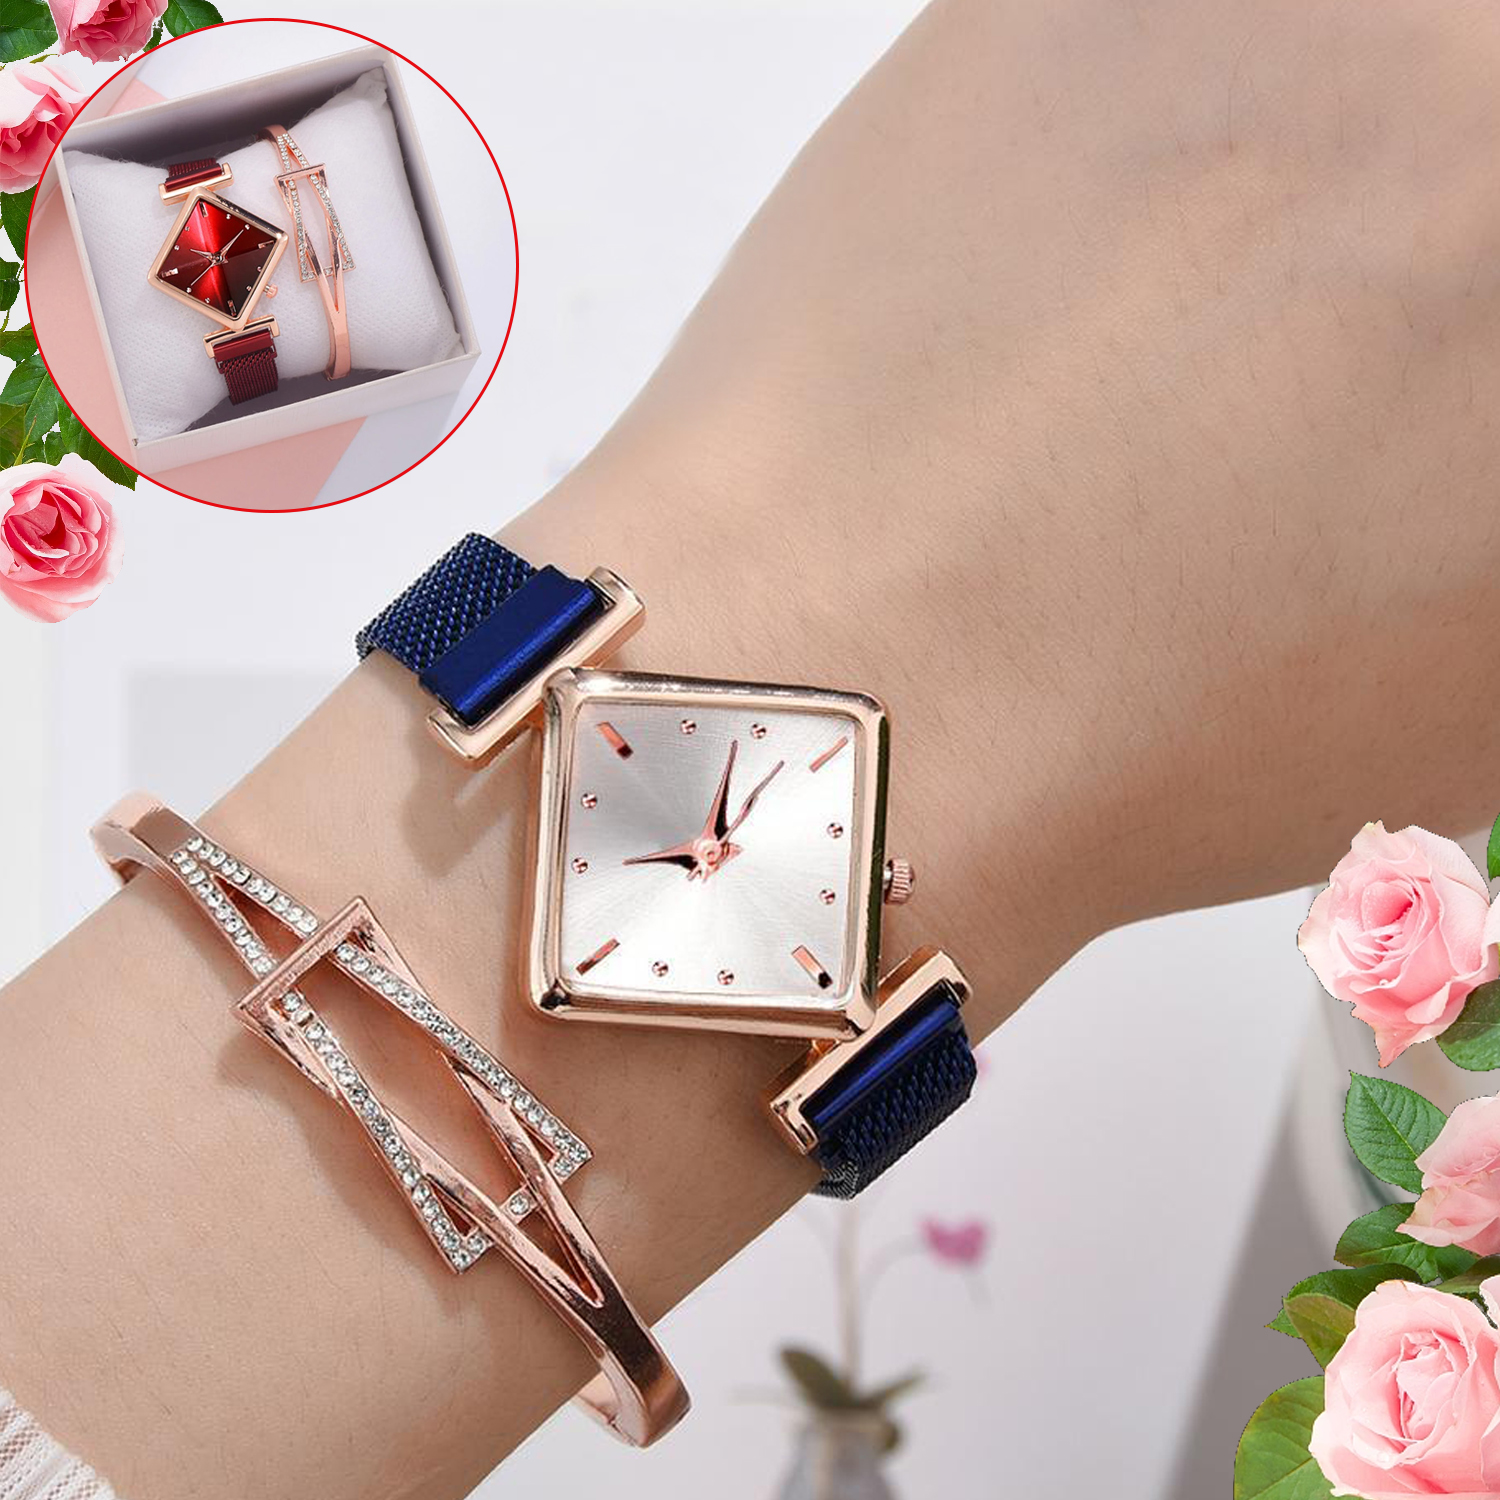 Women Square Watch Luxury Ladies Quartz Magnet Buckle Gradient Color Watches Fashion Wristwatch For Gift Clock